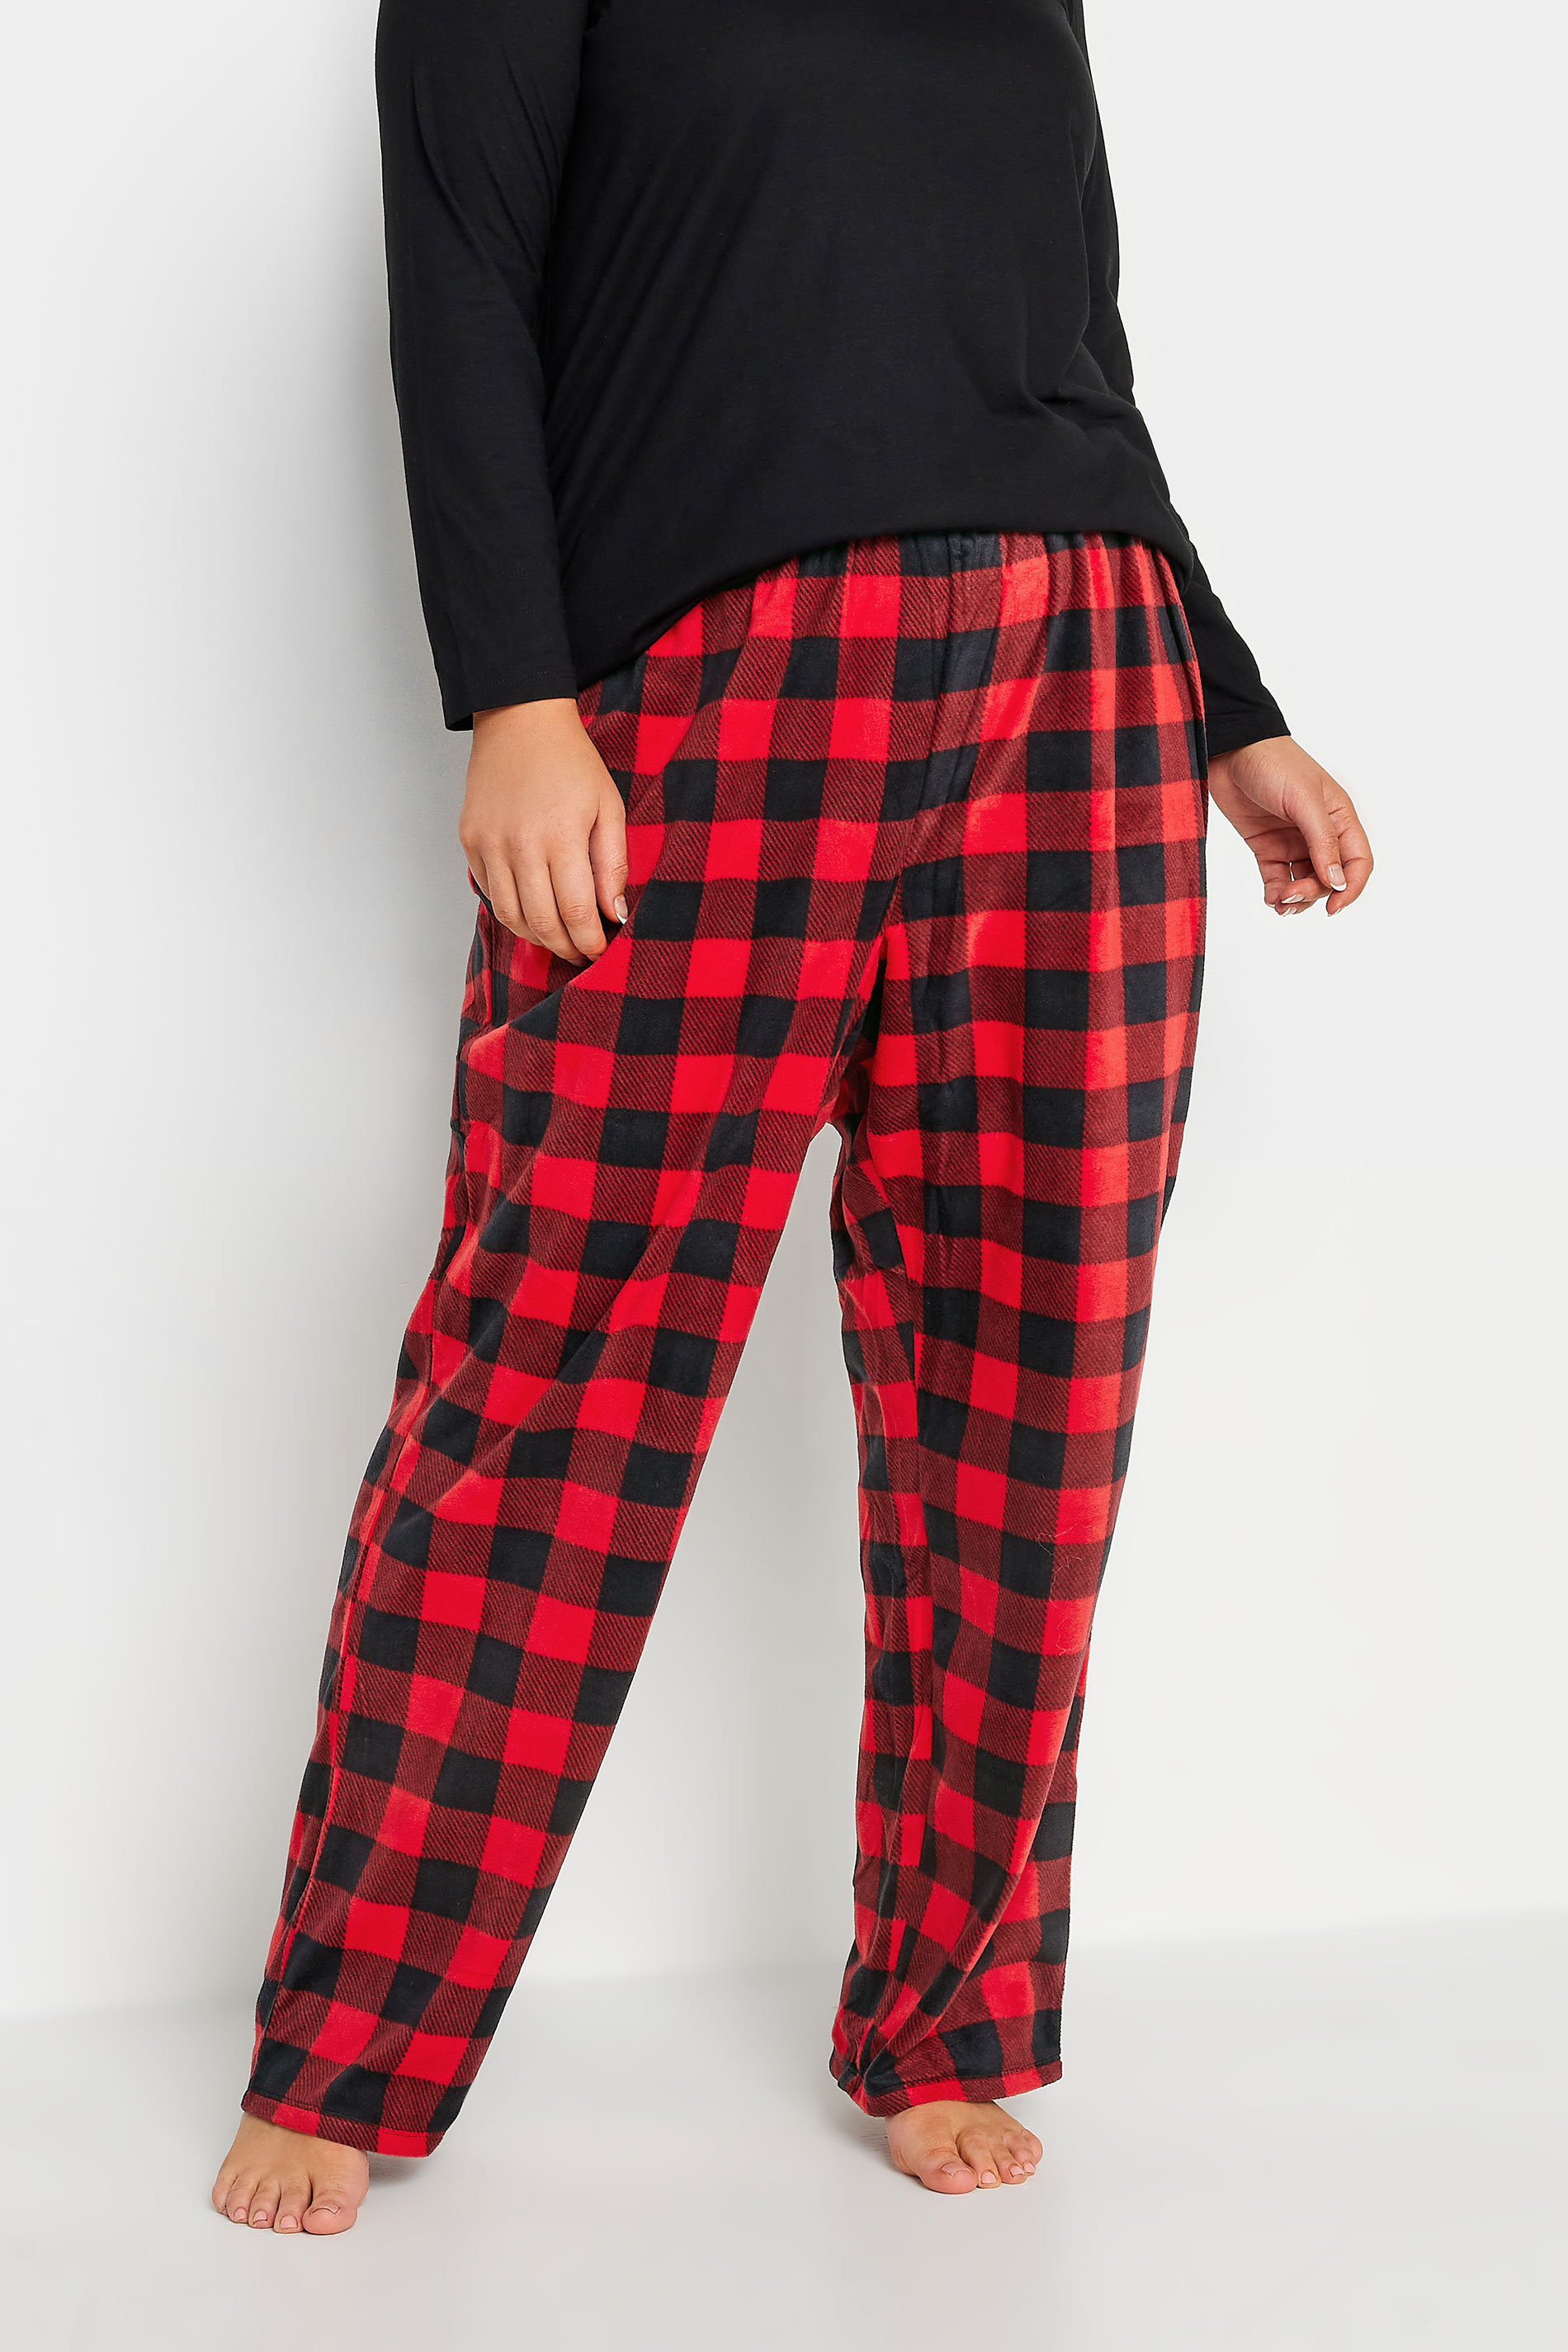 YOURS Curve Plus Size Red Tartan Print Fleece Pyjama Bottoms | Yours Clothing  2